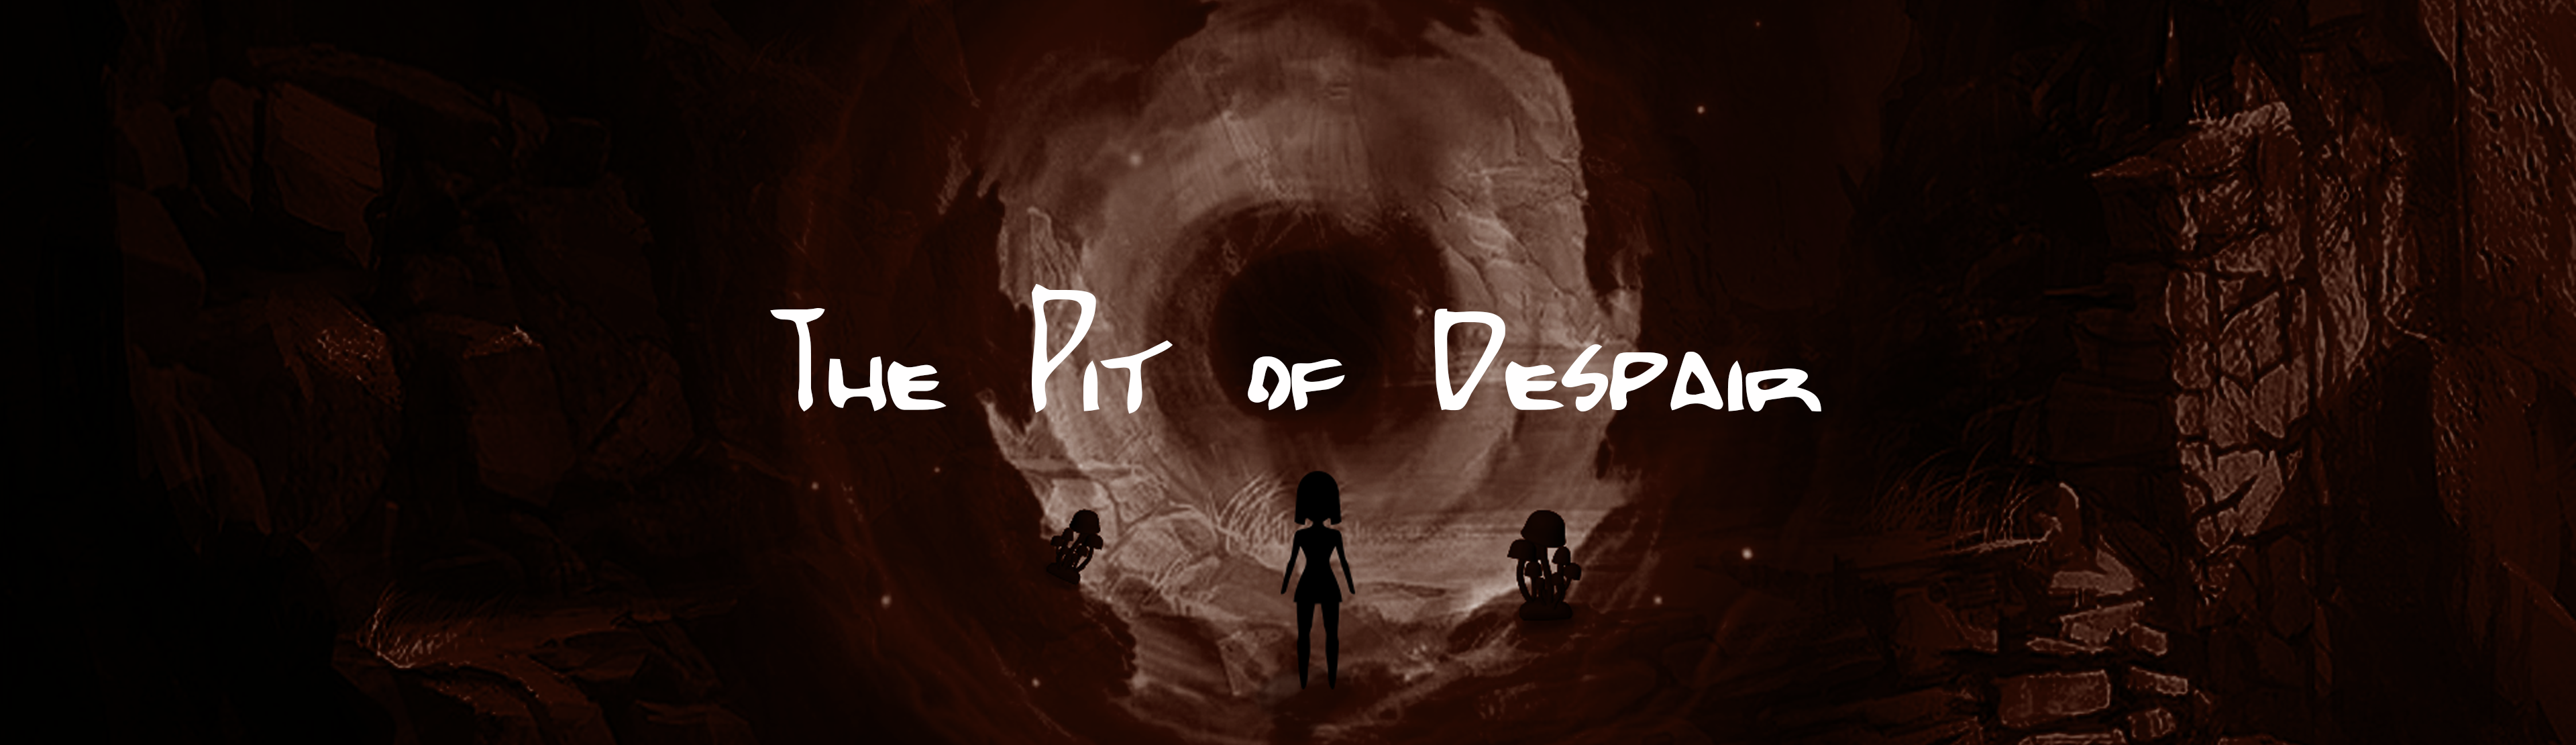 The Pit of Despair